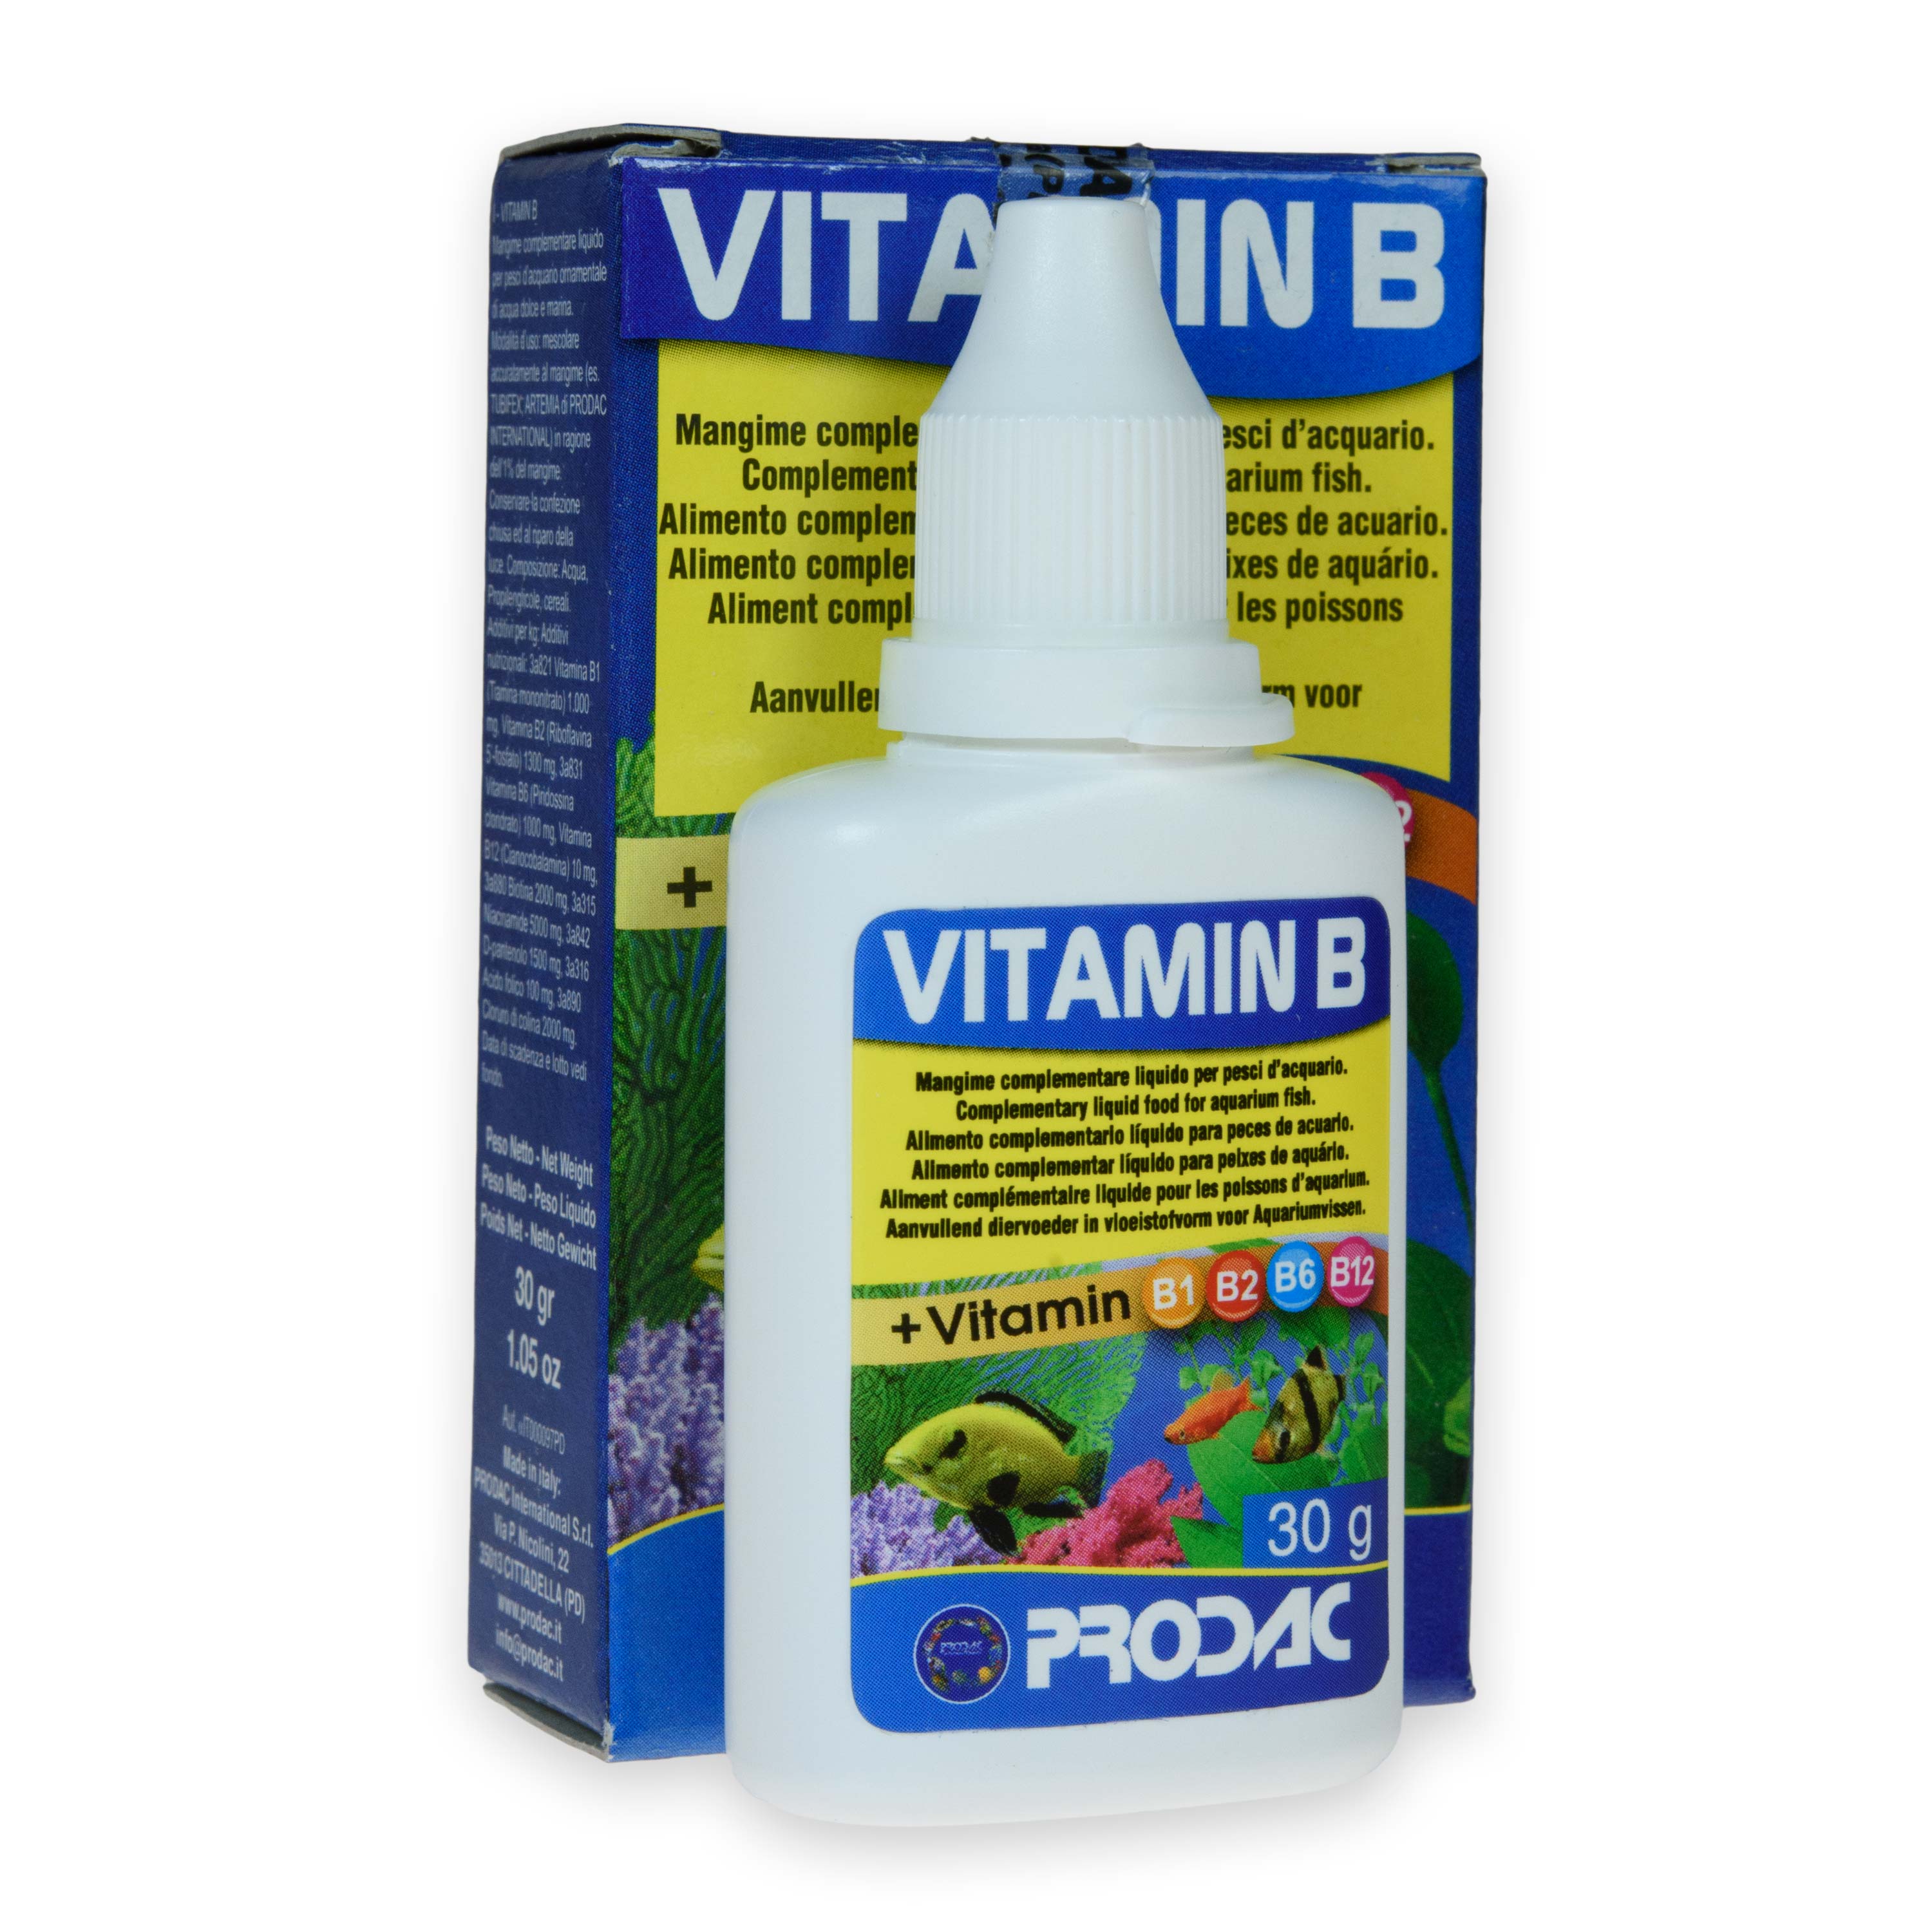 Prodac Vitamin B 30 g Packungsinhalt